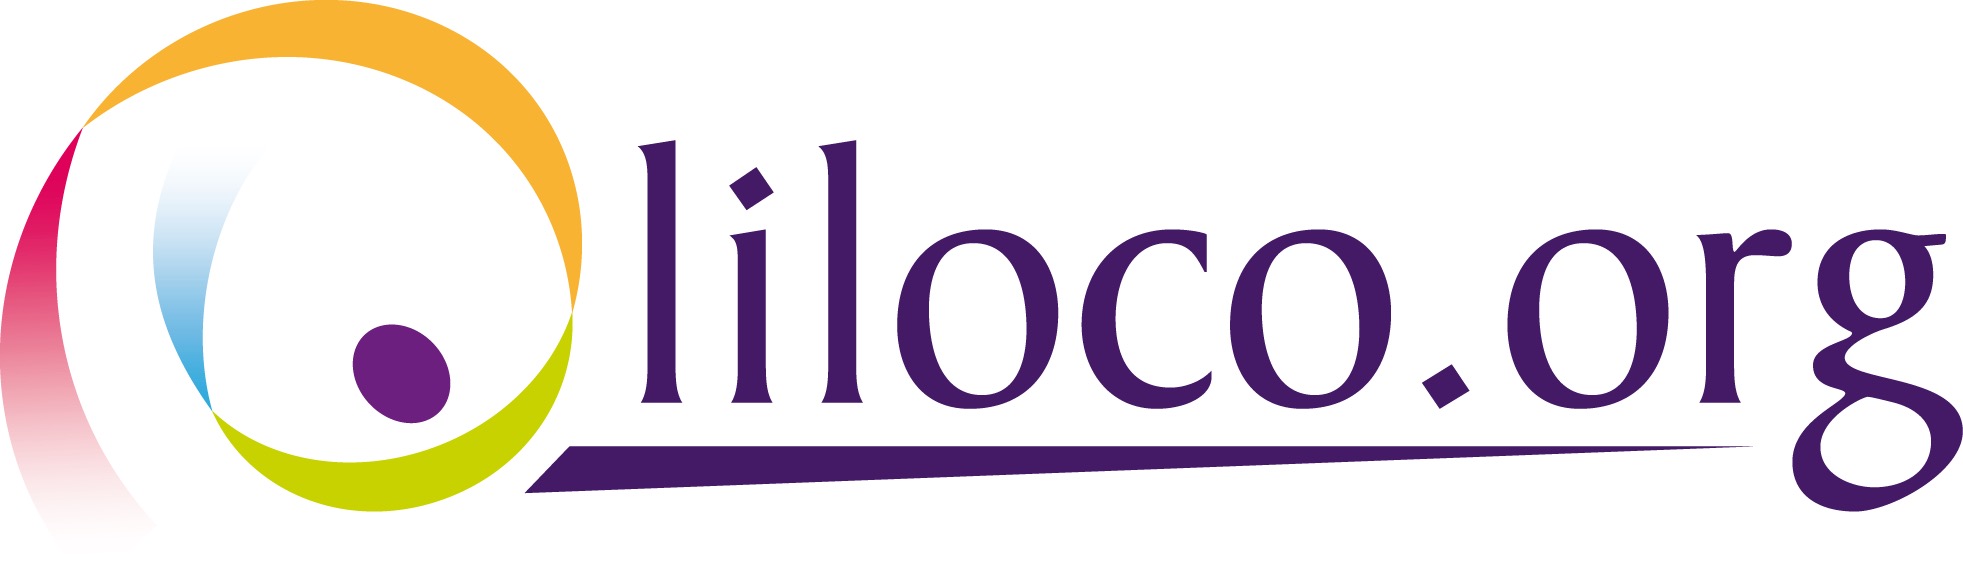 Portes ouvertes : Liloco.org.